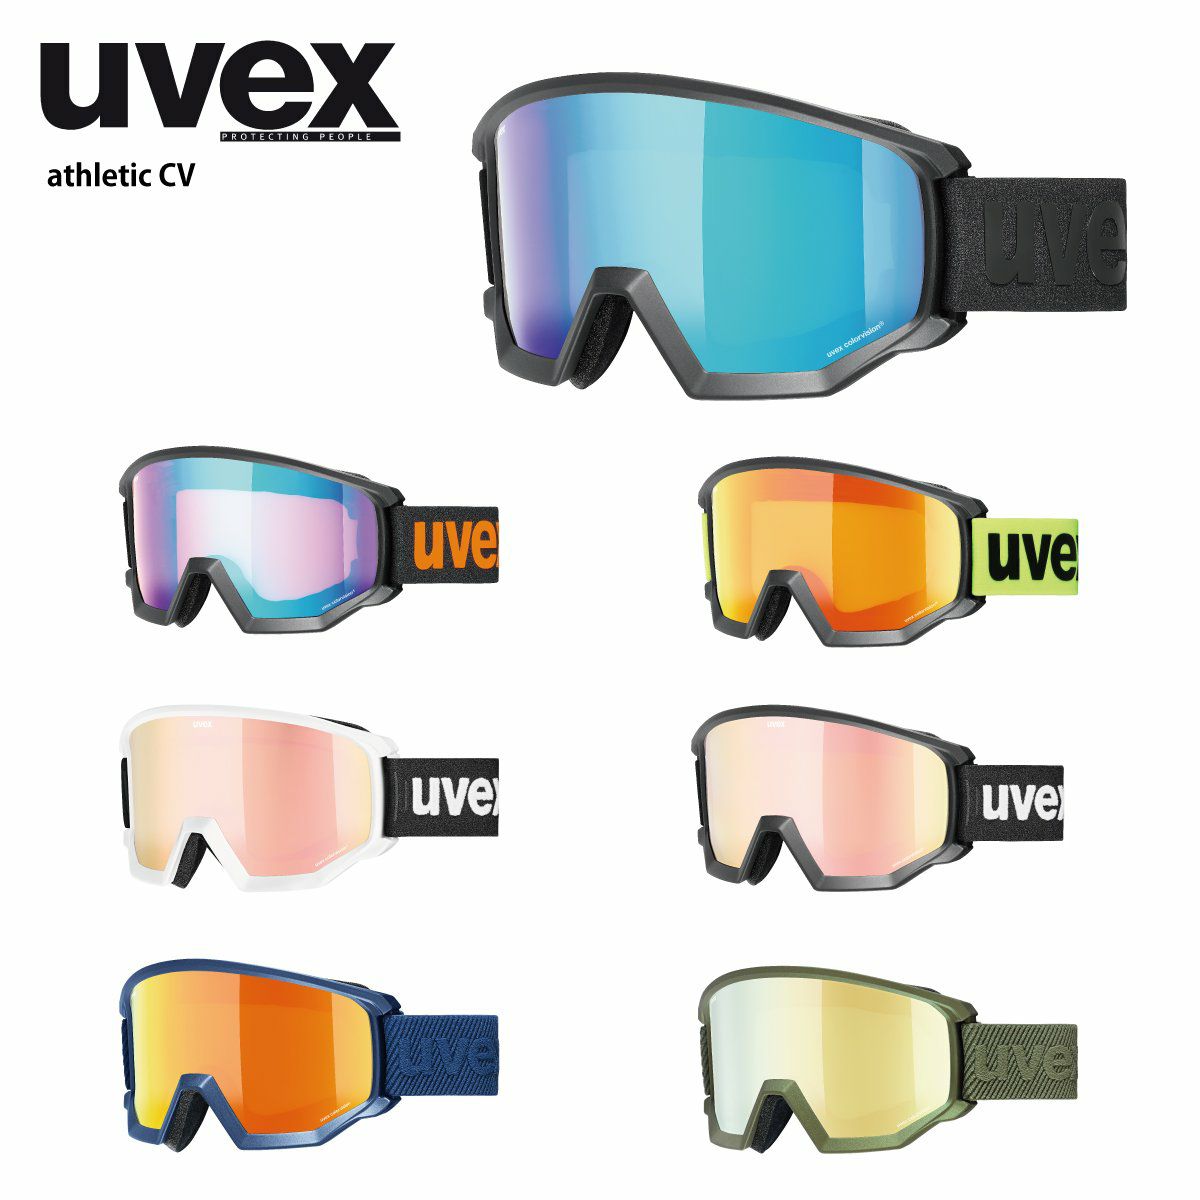 uvex スキースノーボードゴーグル ユニセックス ハイコントラストミラー シングルレンズ メガネ使用可 athletic CV Free